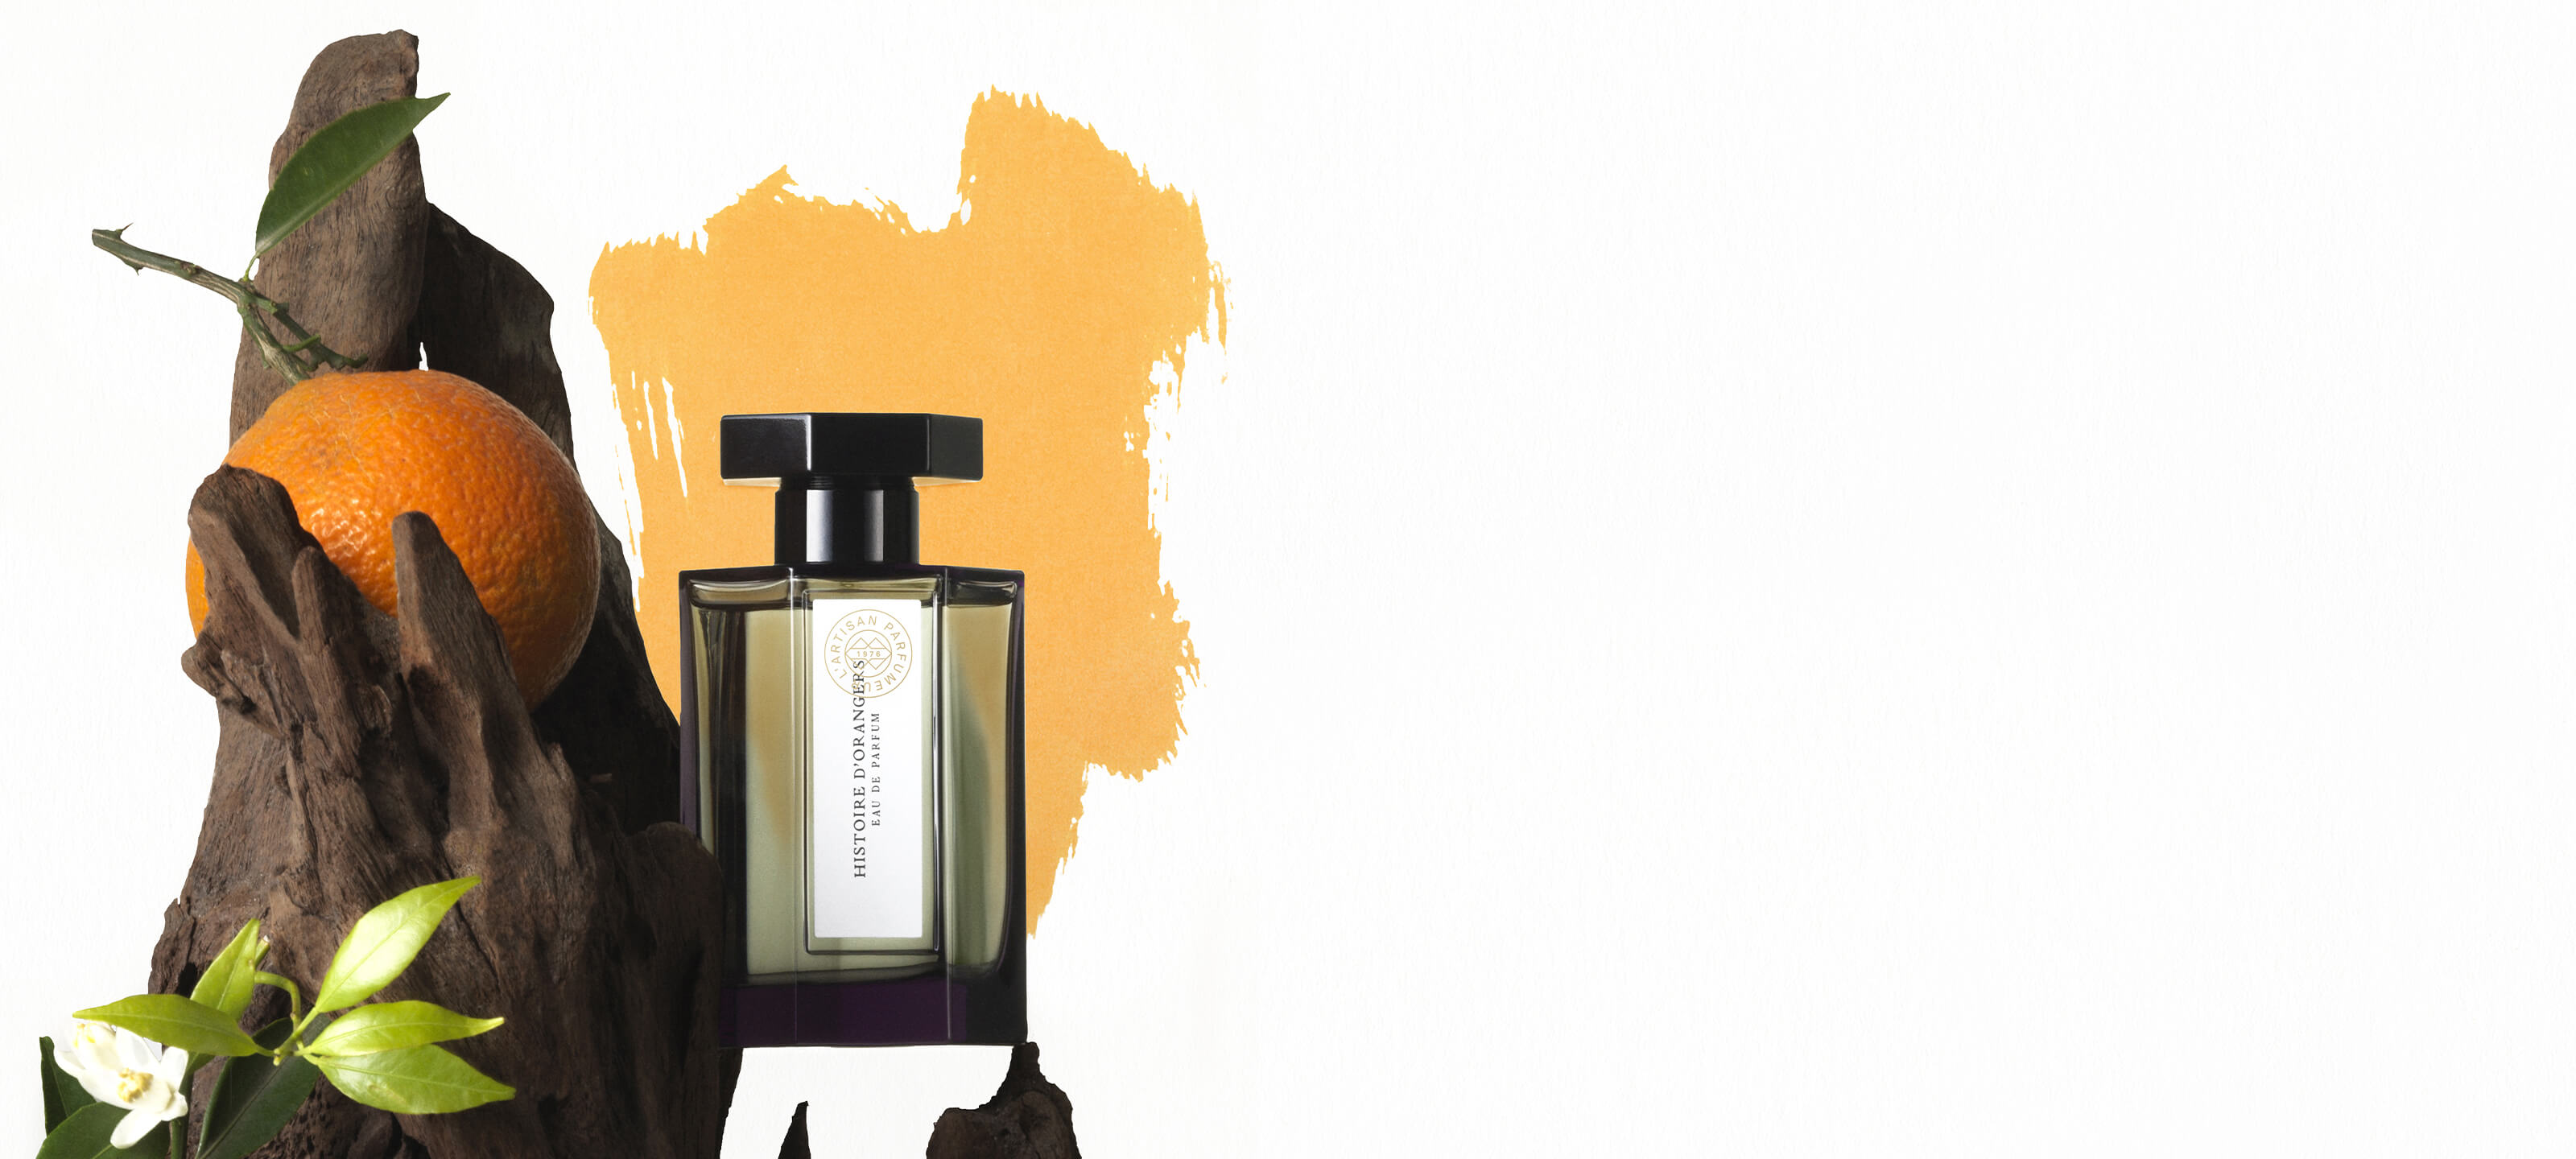 L'Artisan Parfumeur celebrates Neroli this month